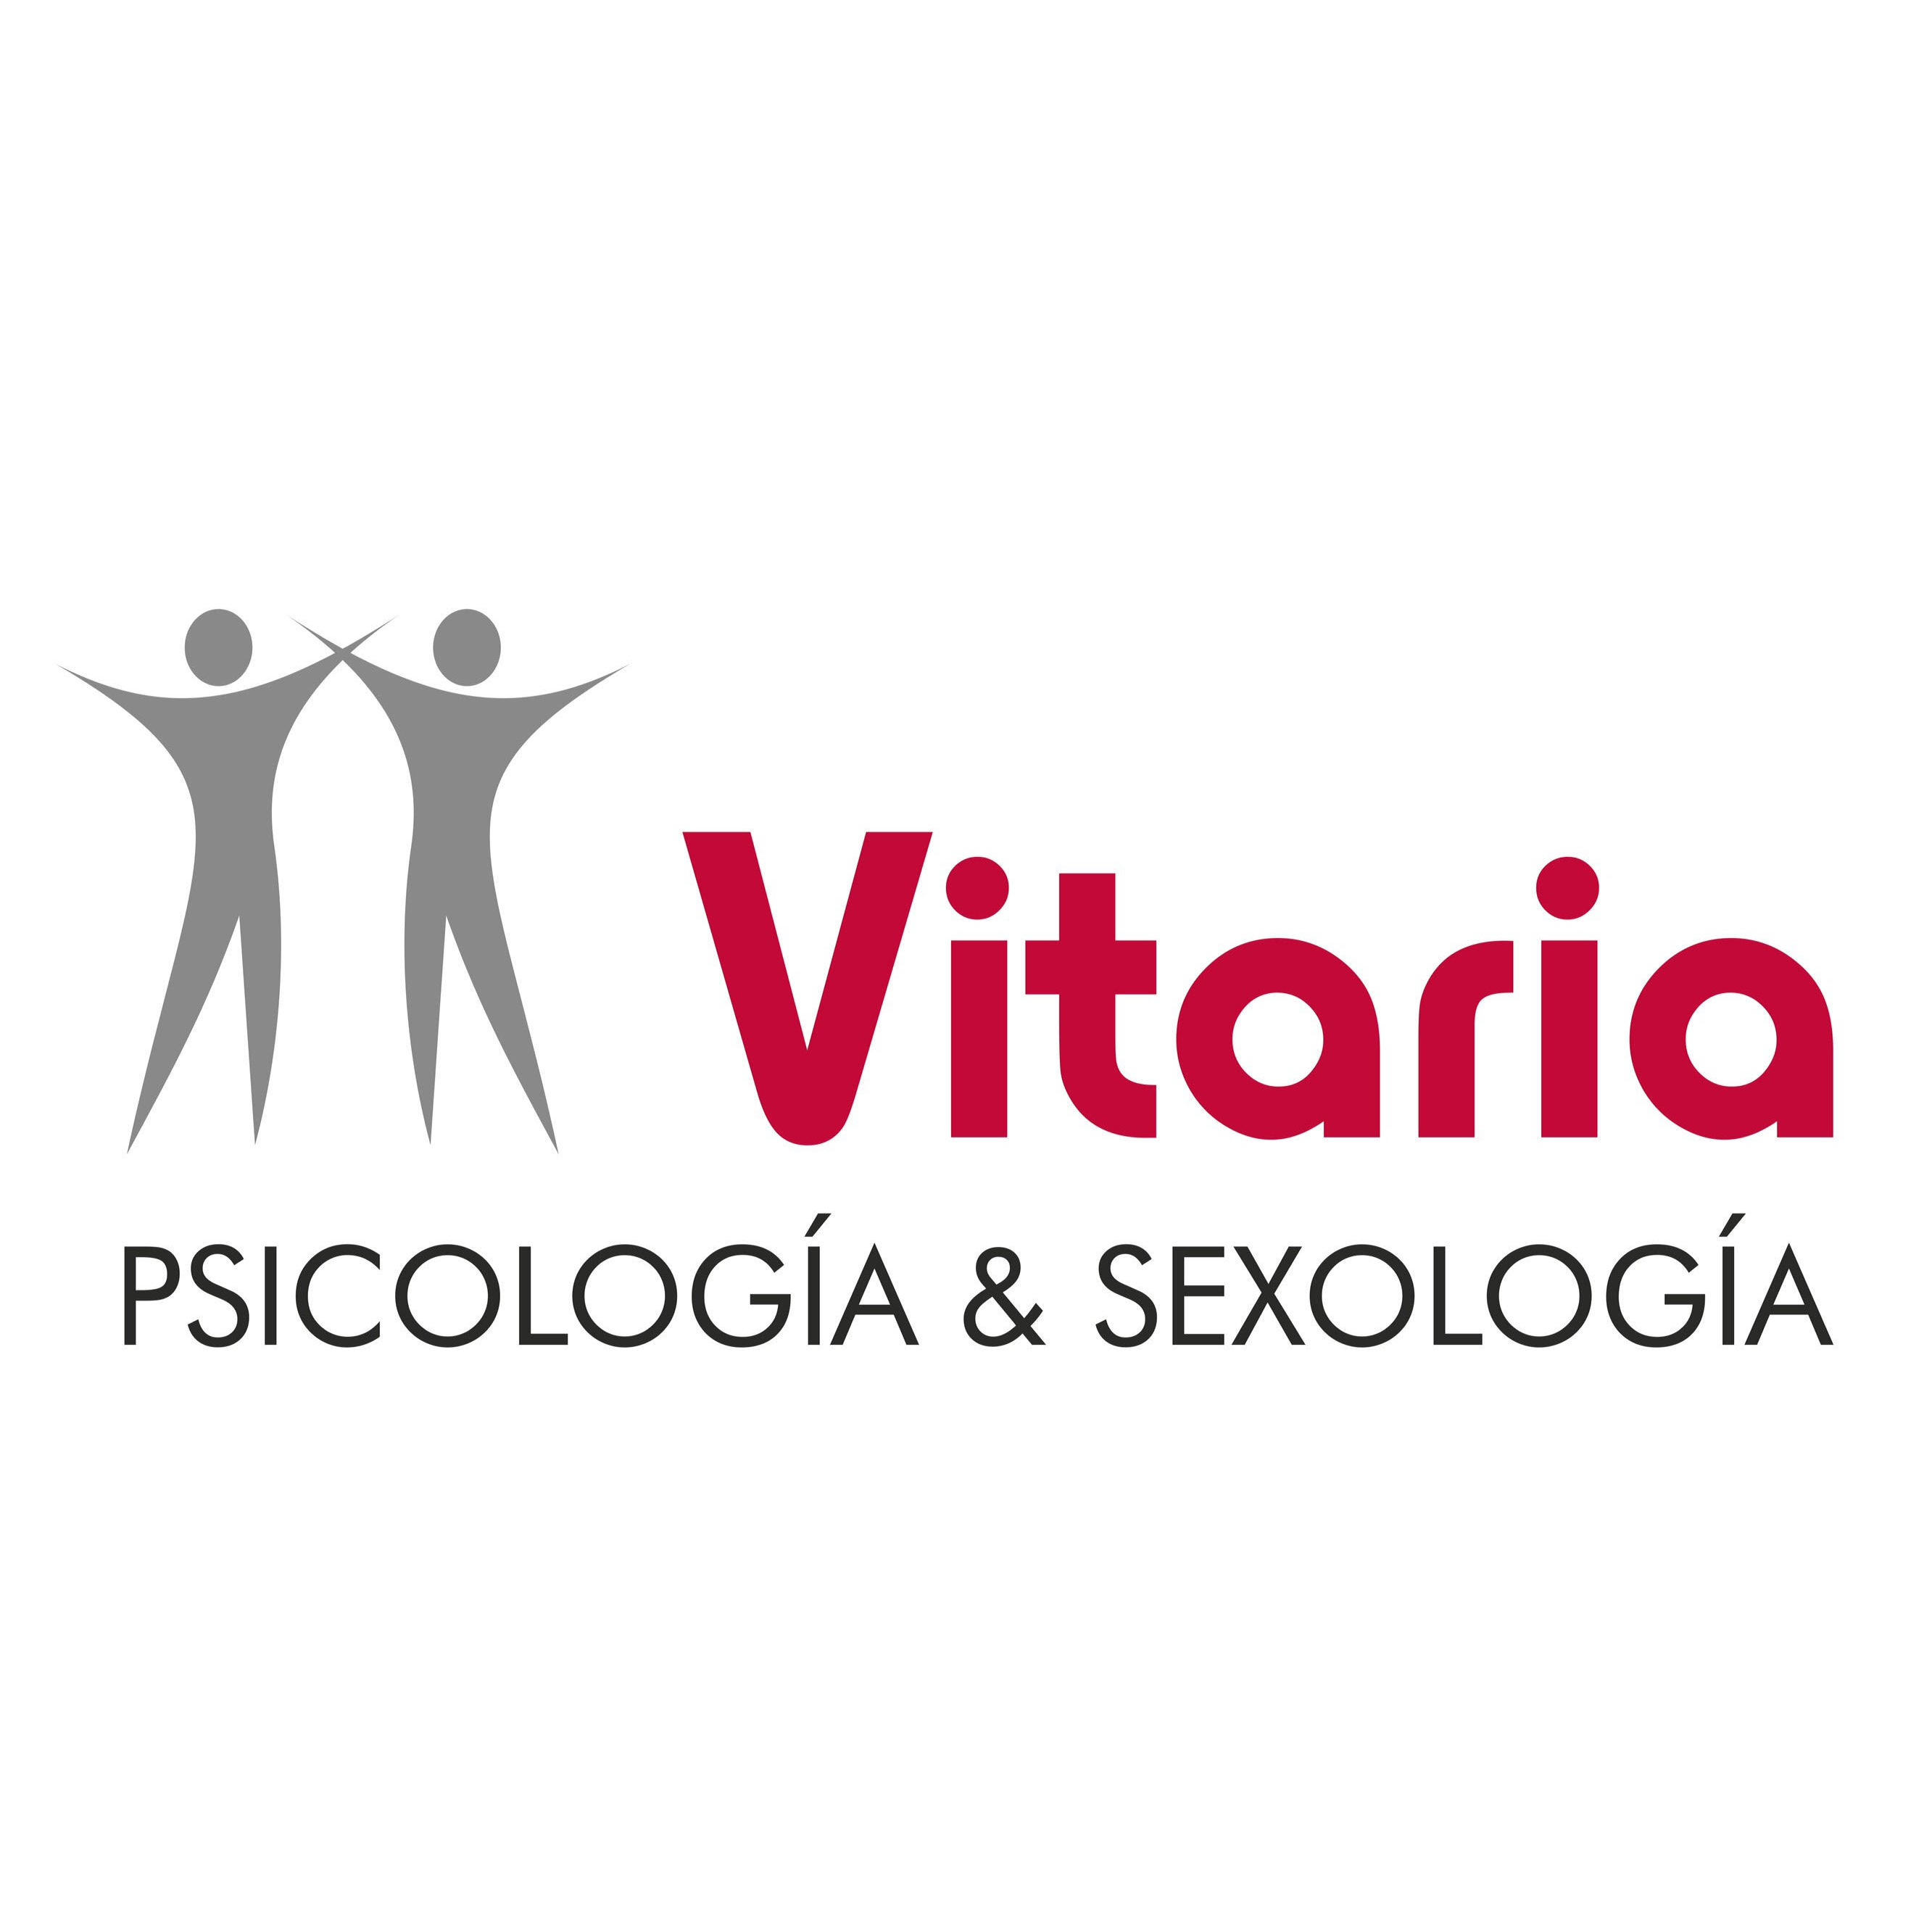 Centro Vitaria Psicología & Sexología Logo